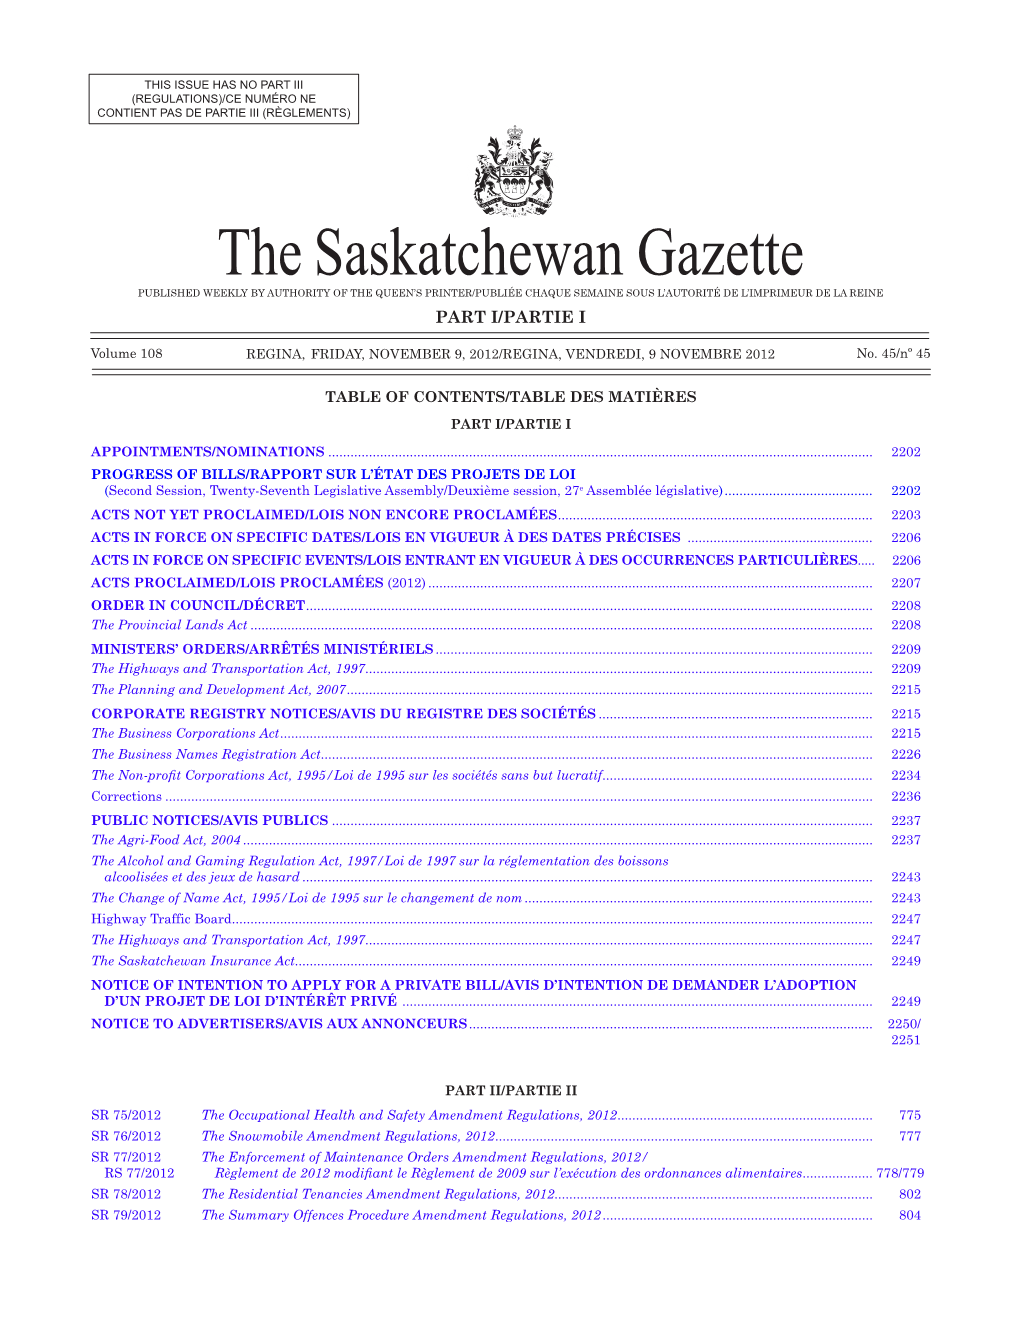 THE SASKATCHEWAN GAZETTE, November 9, 2012 2201